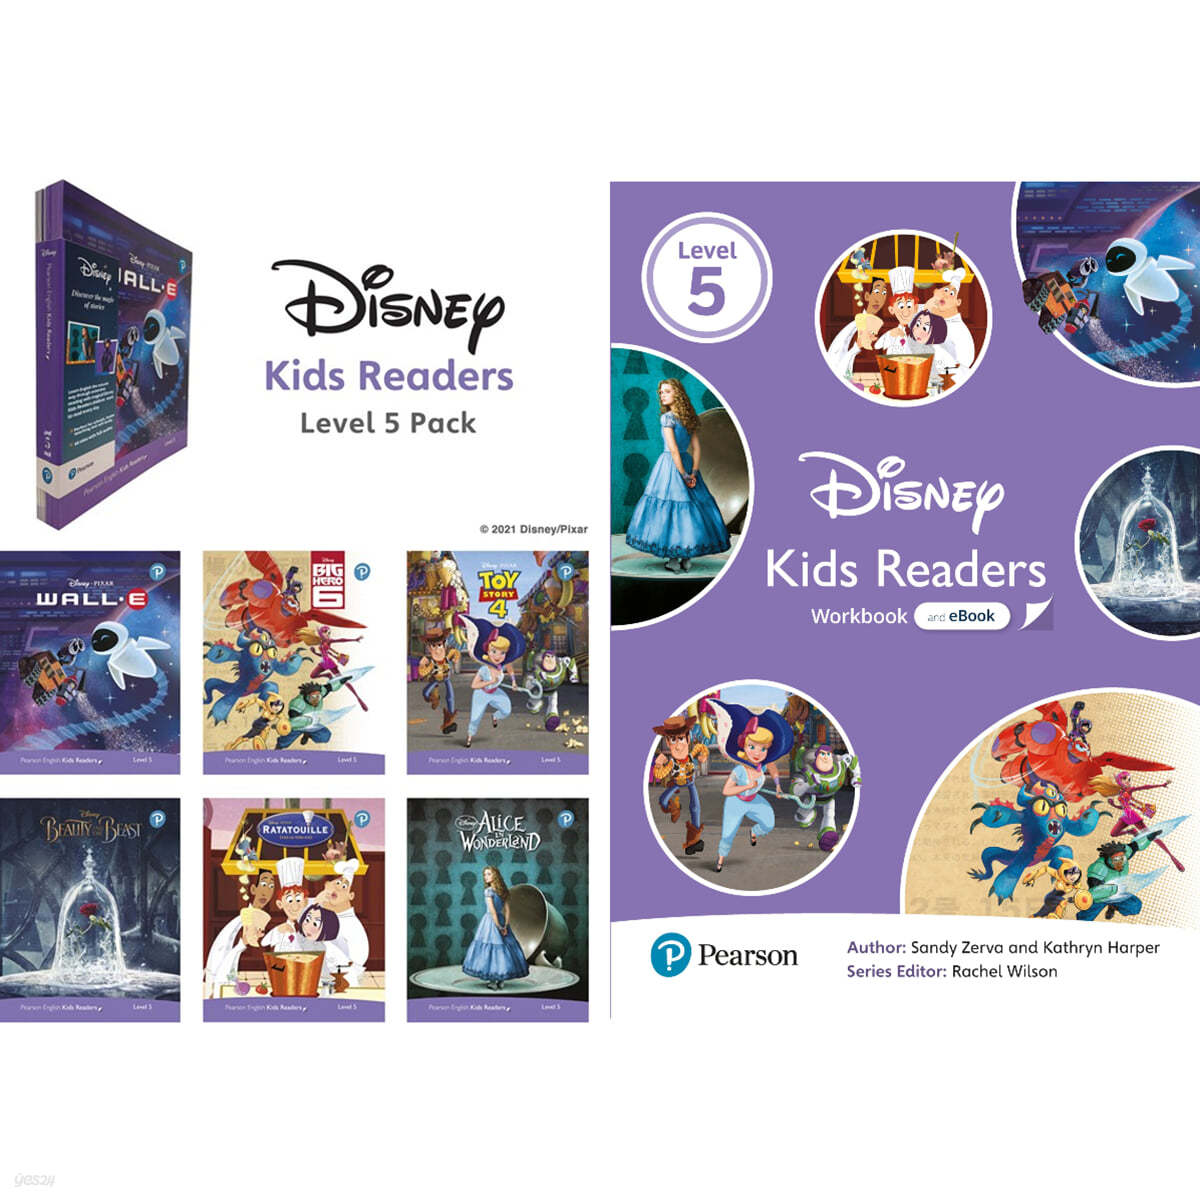 Disney Kids Readers Level 5 세트 (Pack + Workbook)